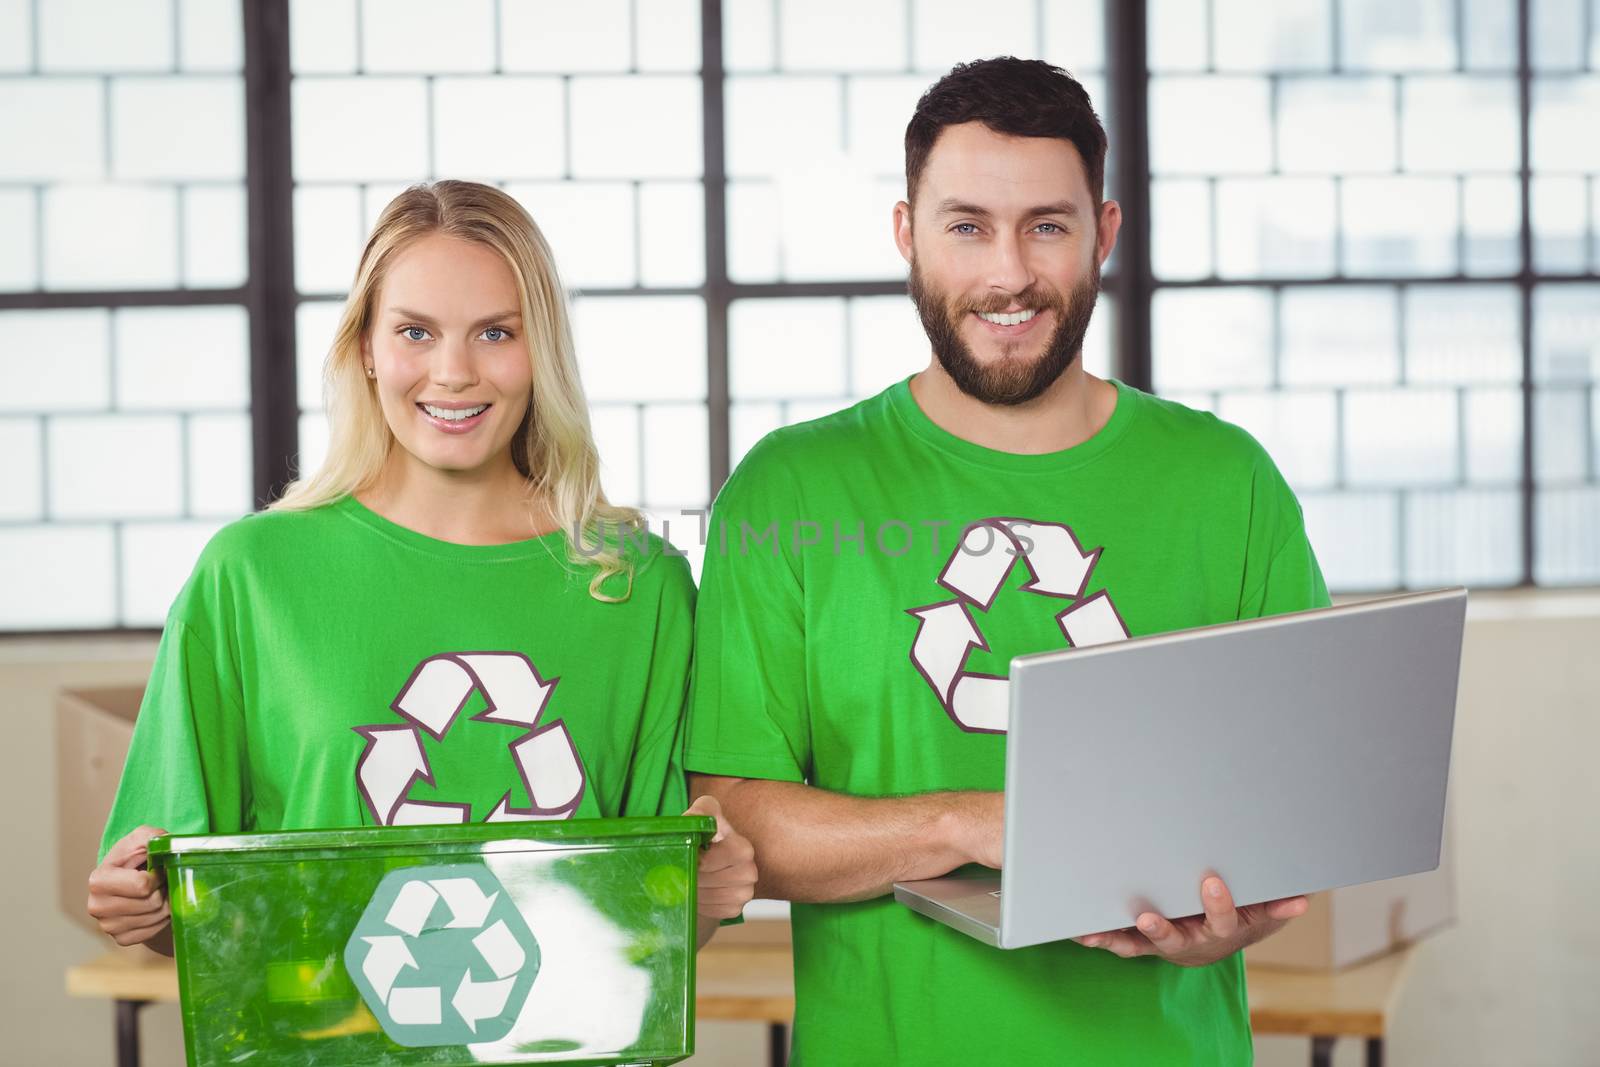 Portrait of smiling volunteers in recycling symbol tshirts  by Wavebreakmedia